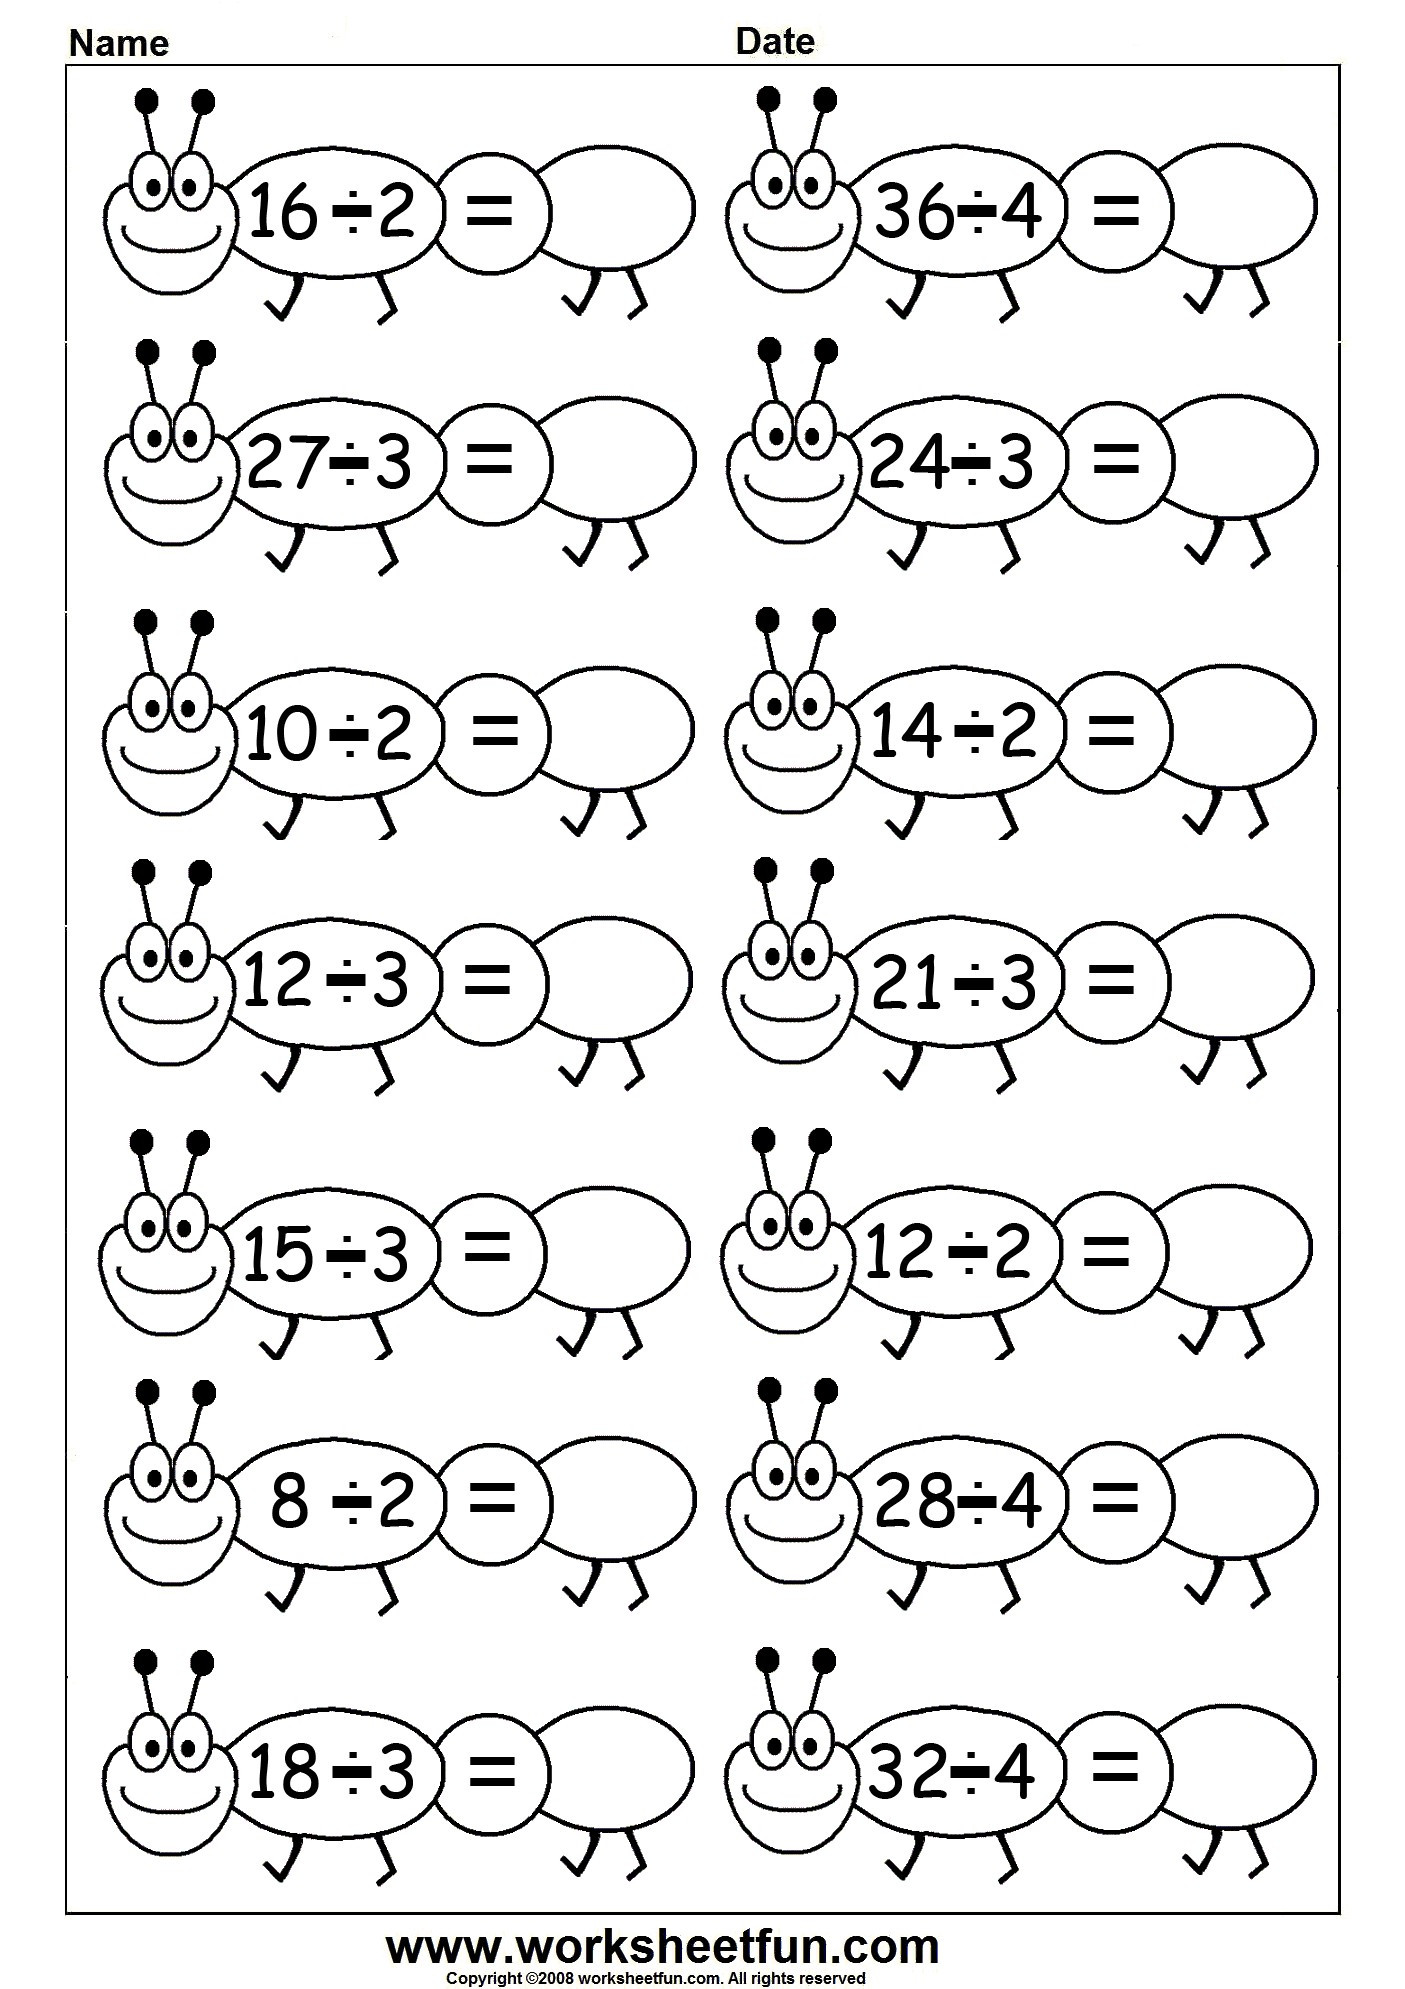 Free Math Worksheets Fourth Grade 4 Addition Adding 2 Digit Mental Sum Under 100